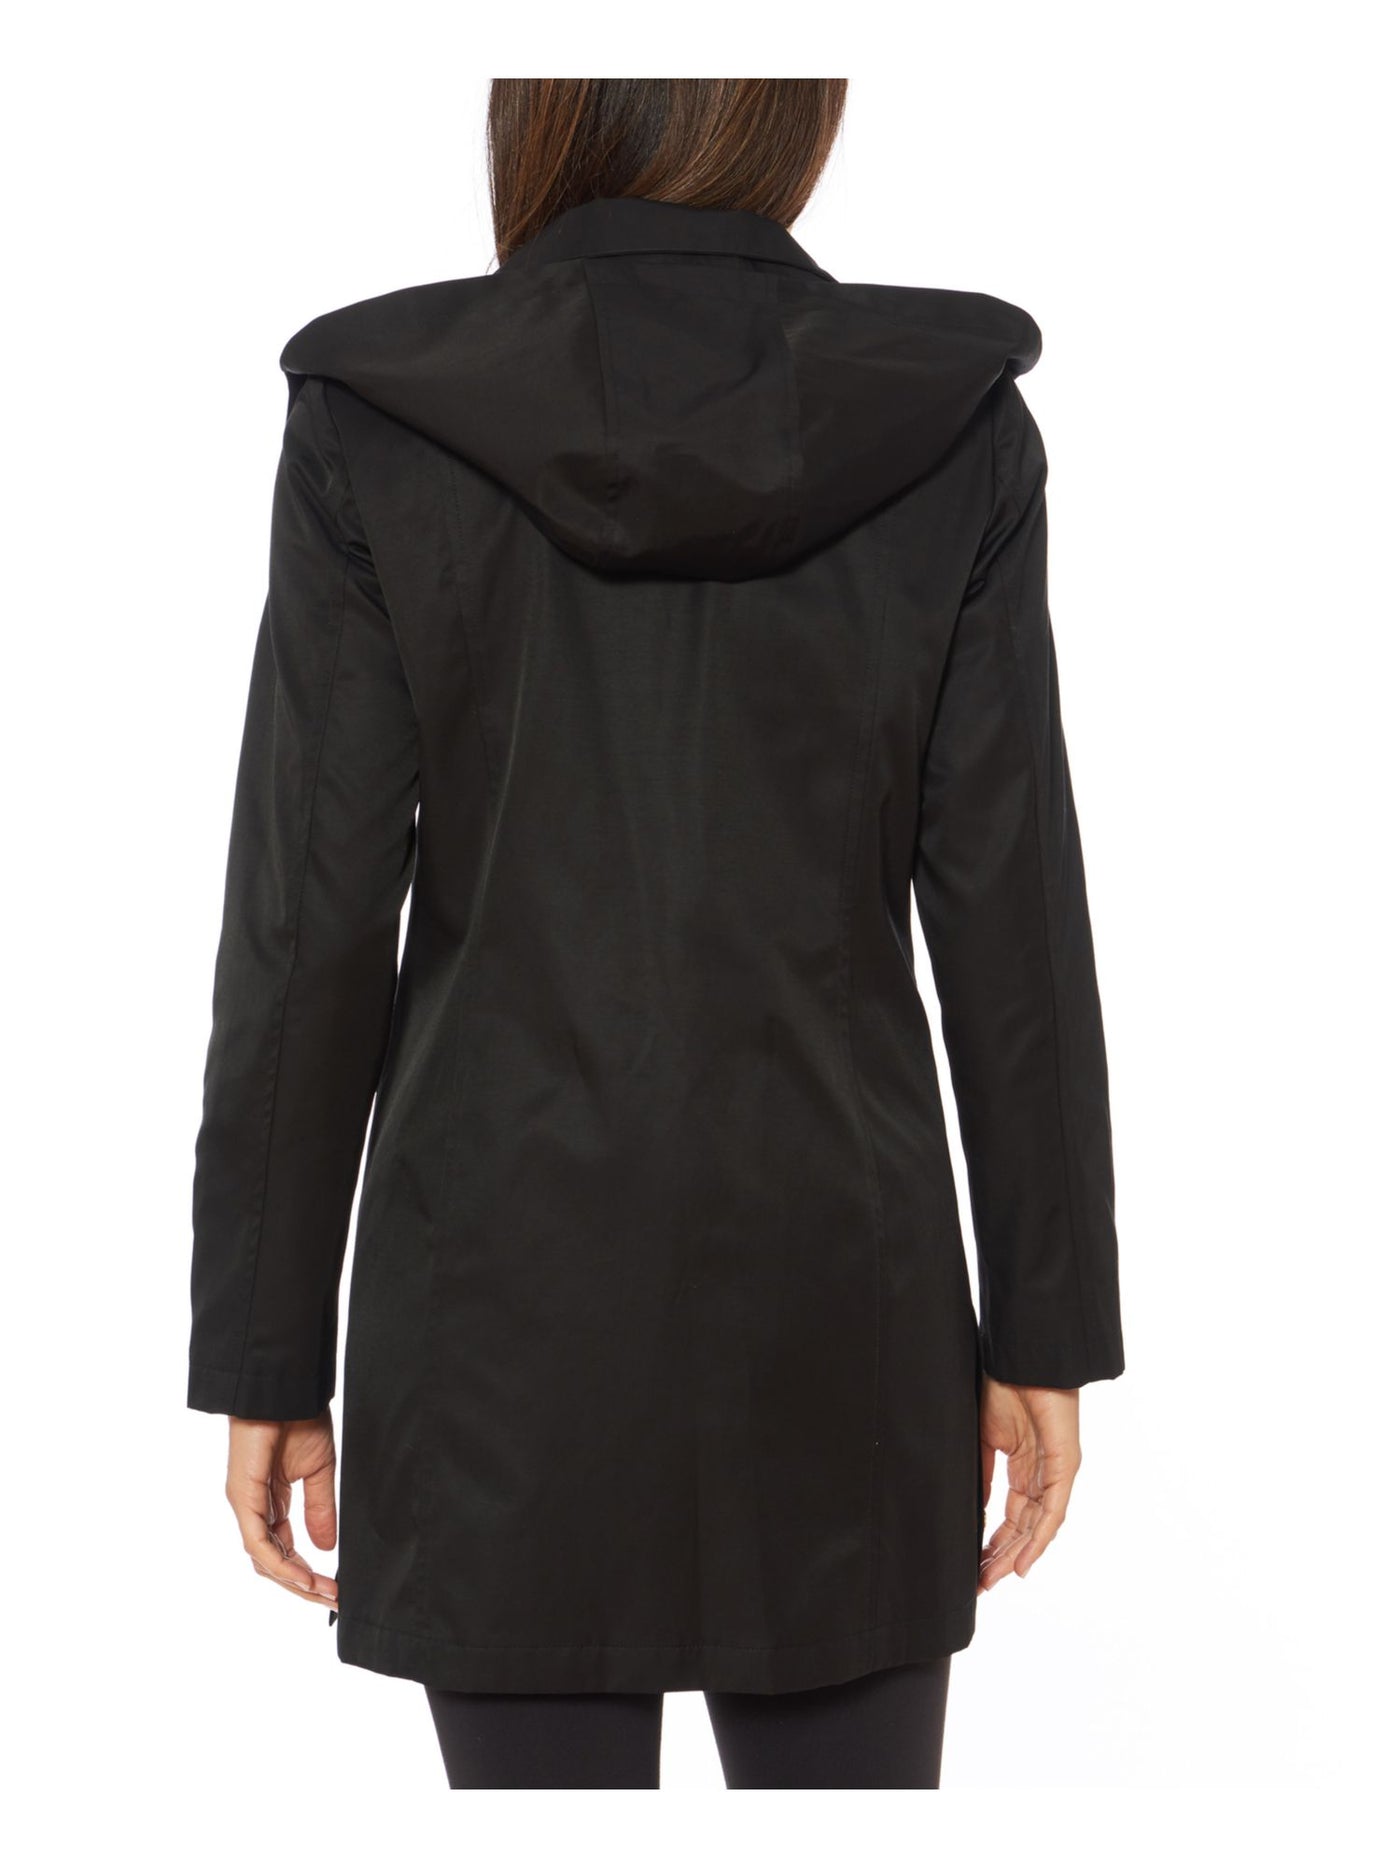 JONES NY Womens Black Pocketed Zippered Hooded Snap-collar Water-resista Raincoat XS